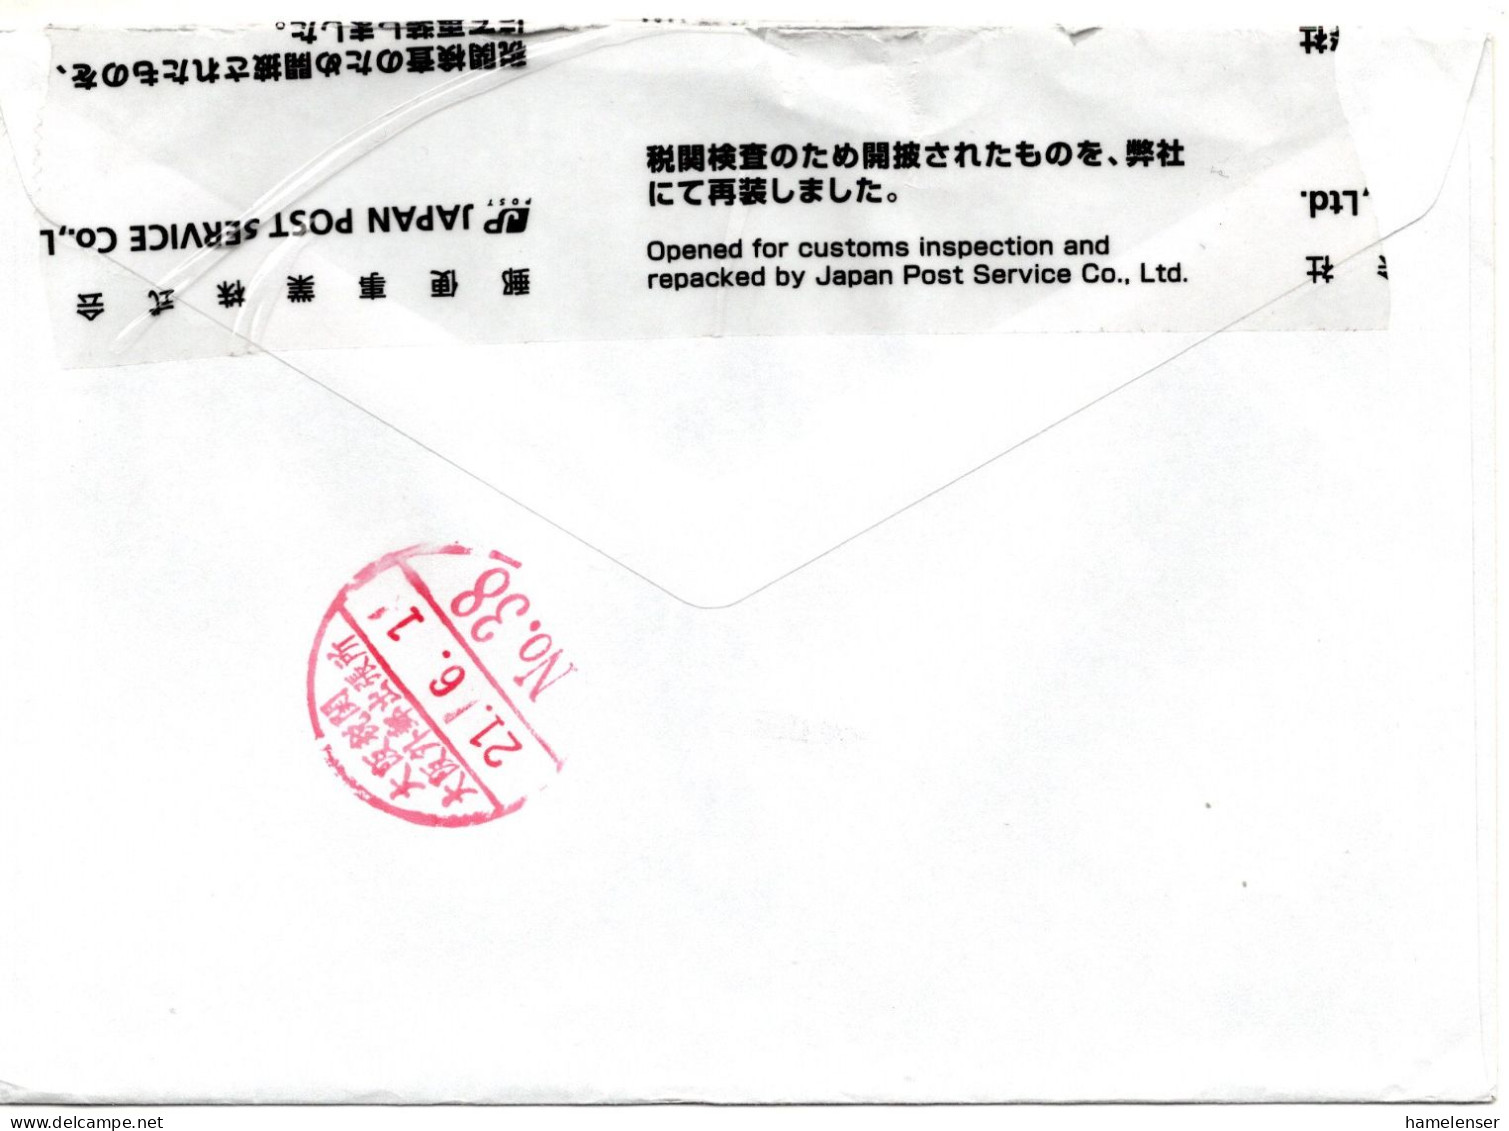 66006 - Niederlande - 2009 - MiF A LpBf Nach Japan, M Niederl Portokontrolle & Japan Zollkontrolle V Zollamt Osaka - Briefe U. Dokumente